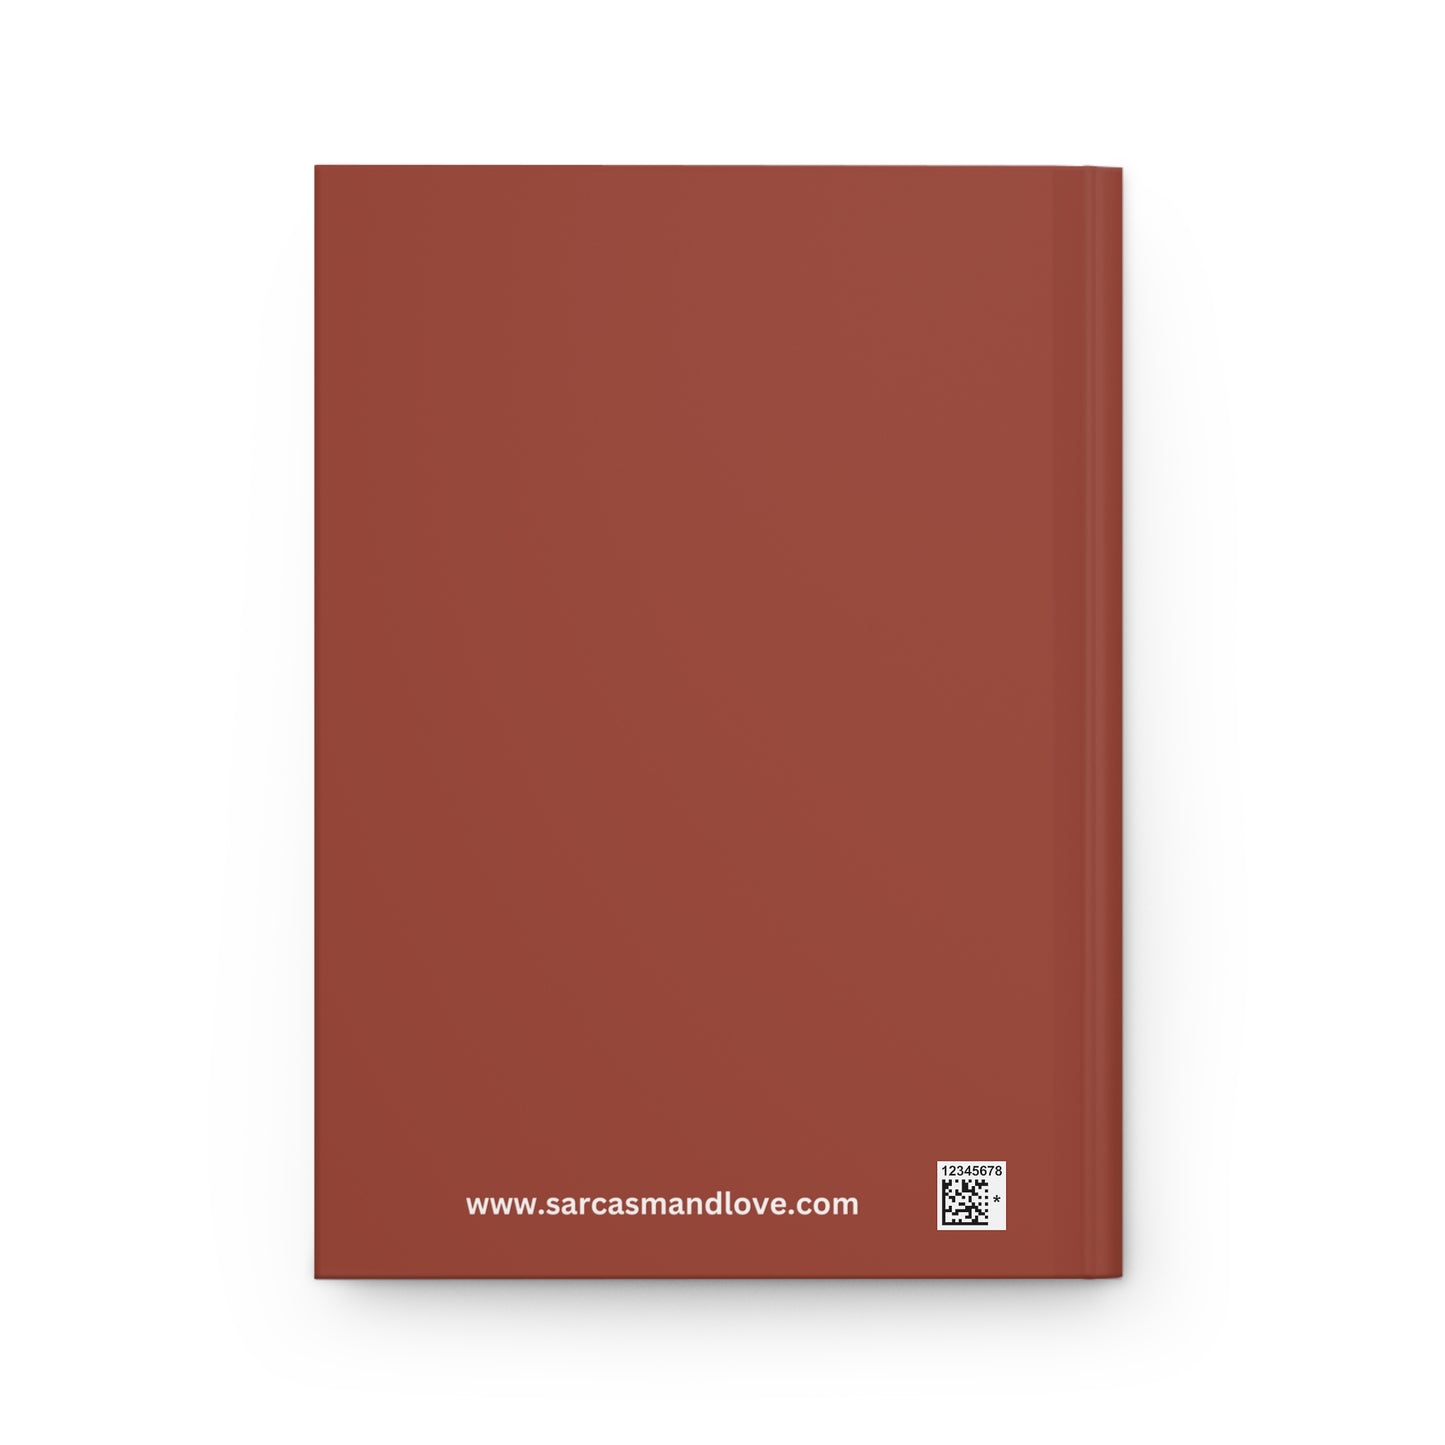 Mystical Creature Hardcover Notebook | Emerging Ground Design | Journal, Self-Care Diary, Gratitude, Wellness & Affirmations | 5.75"x7.5"